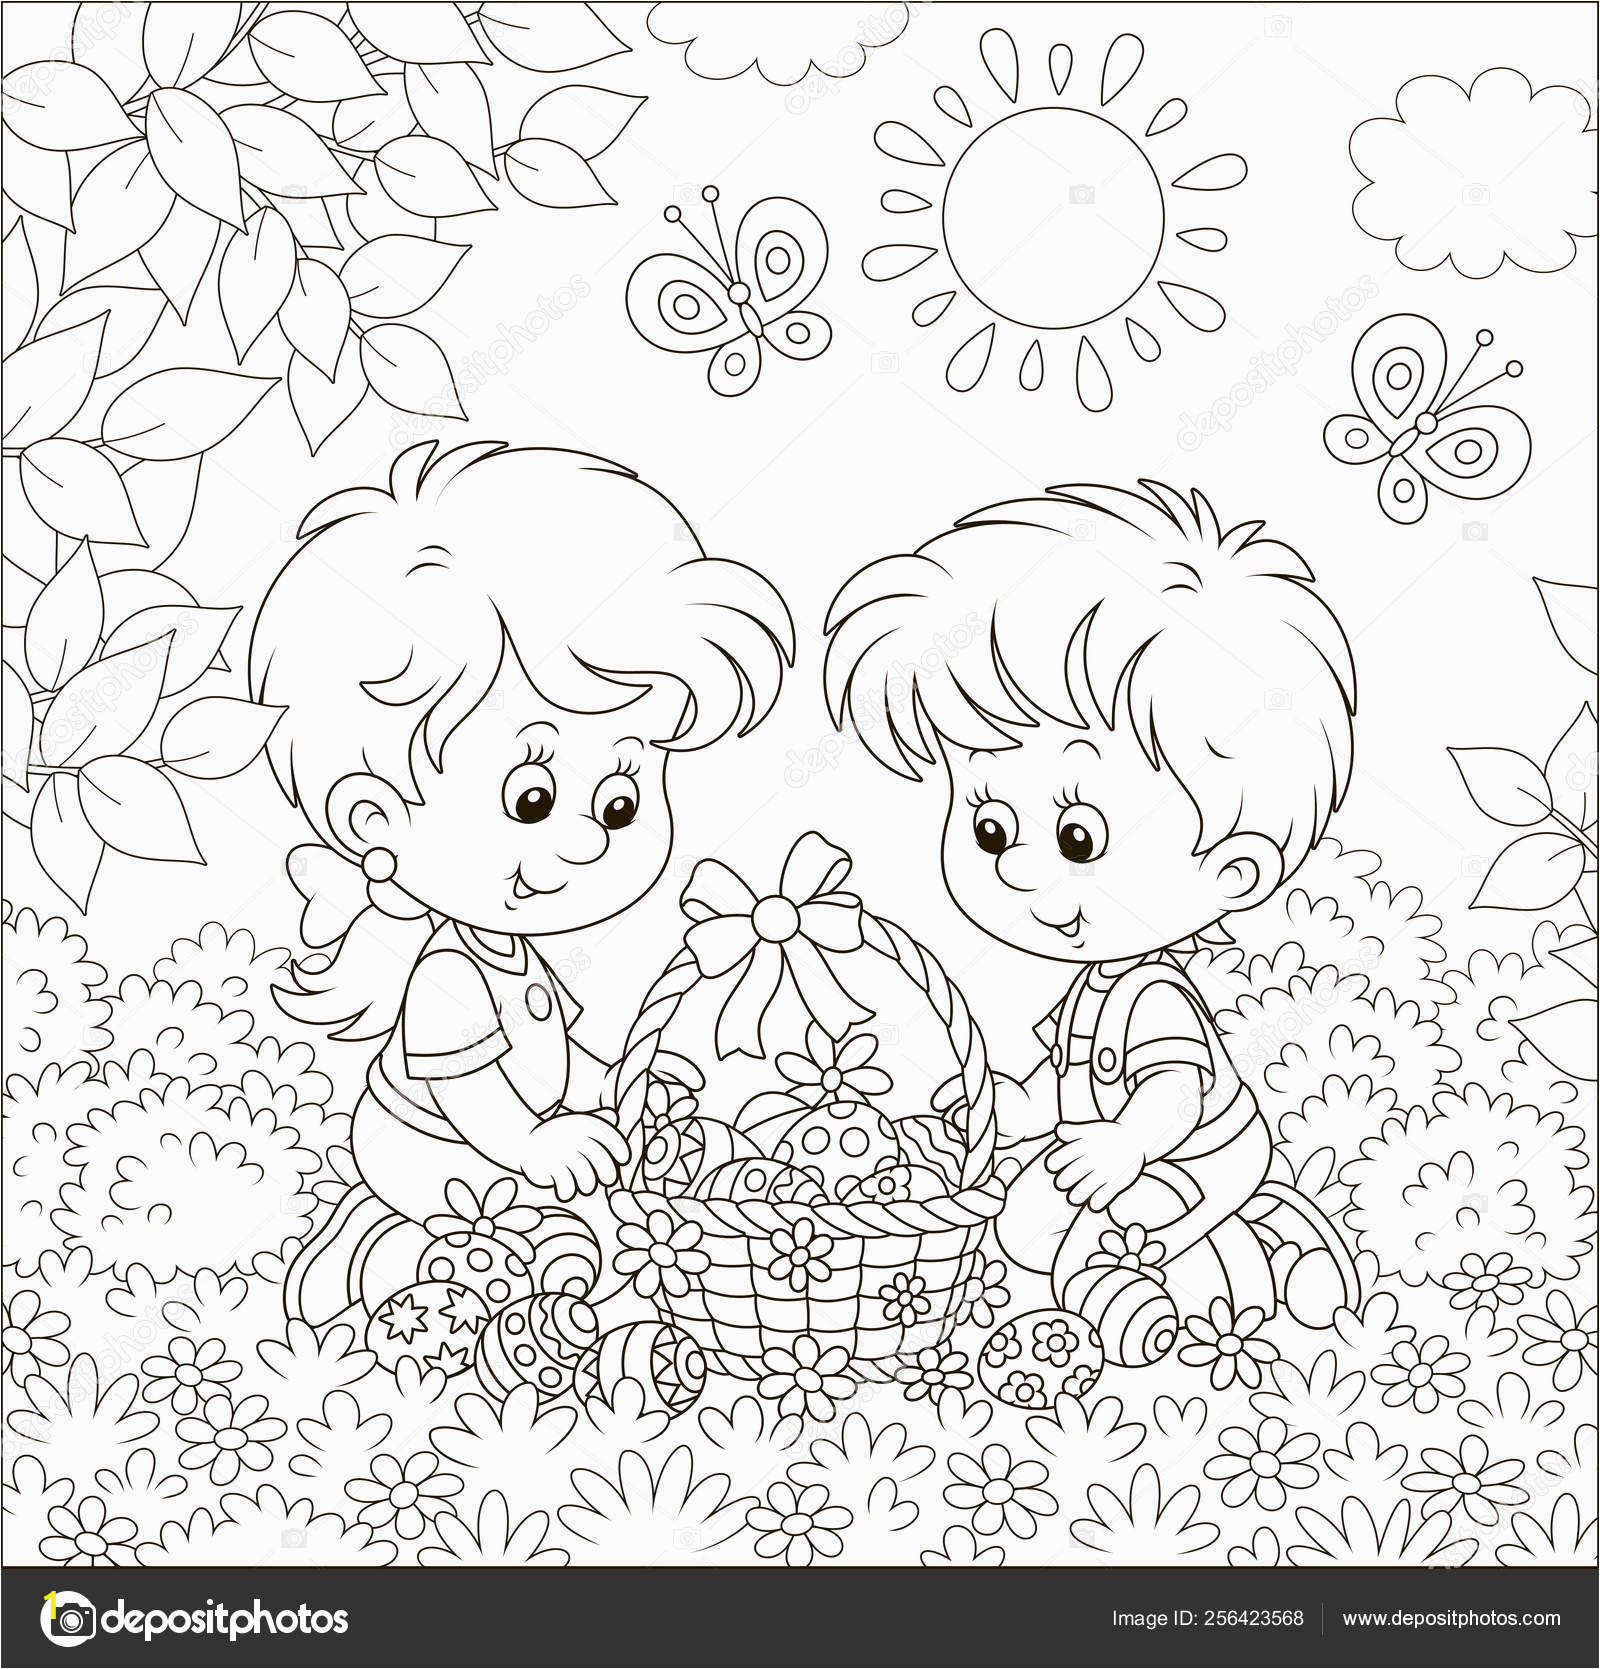 depositphotos stock illustration little children decorated easter basket